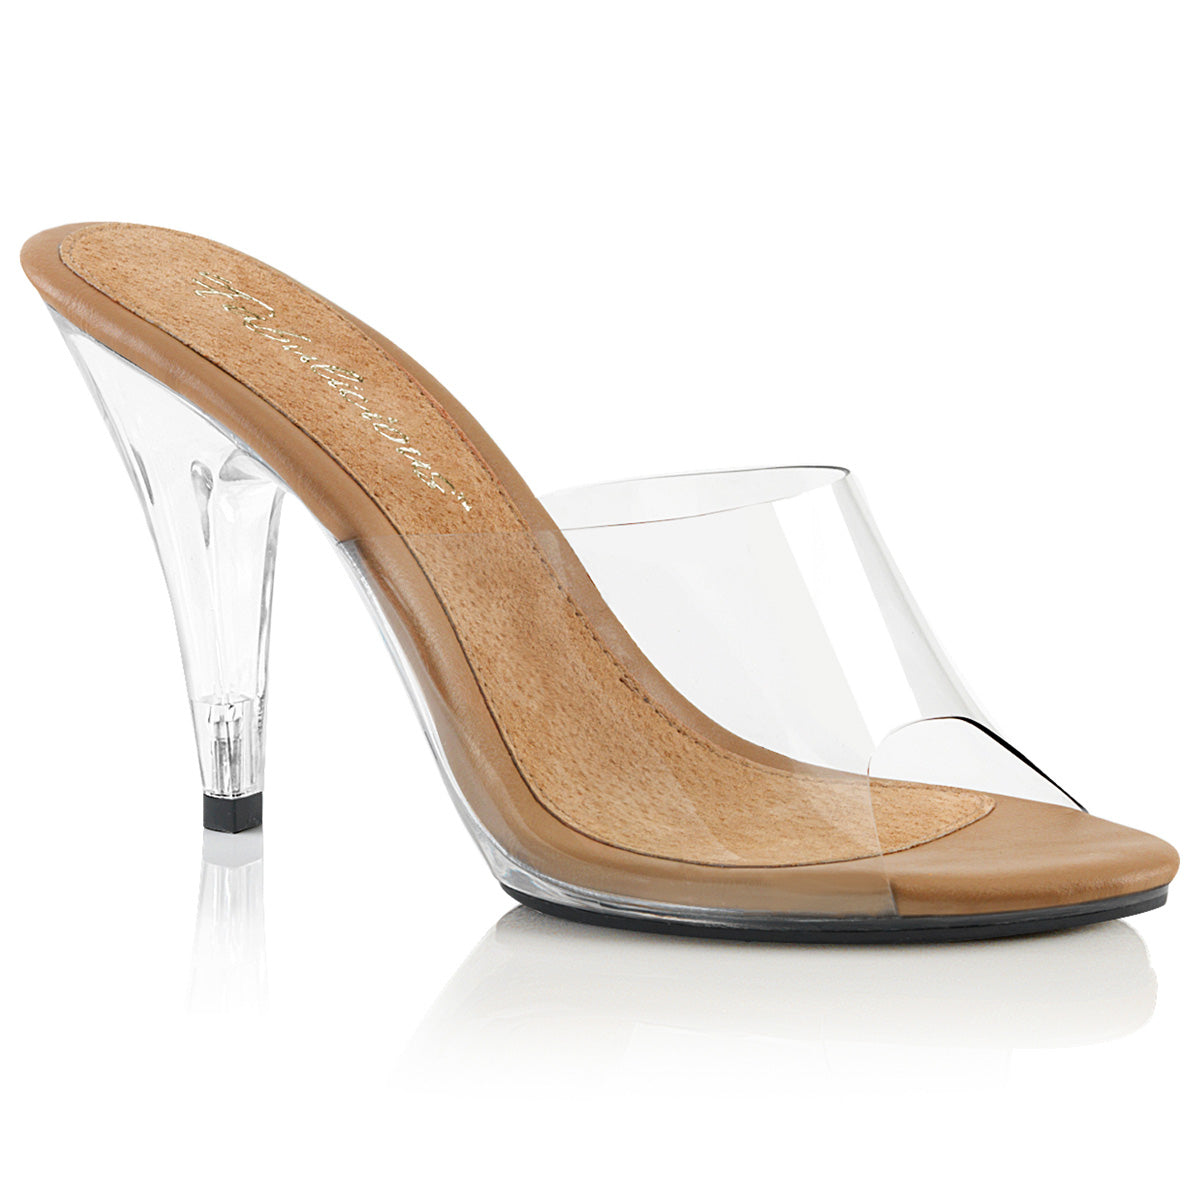 Fabulicious Womens Sandals CARESS-401 Clr-Tan/Clr